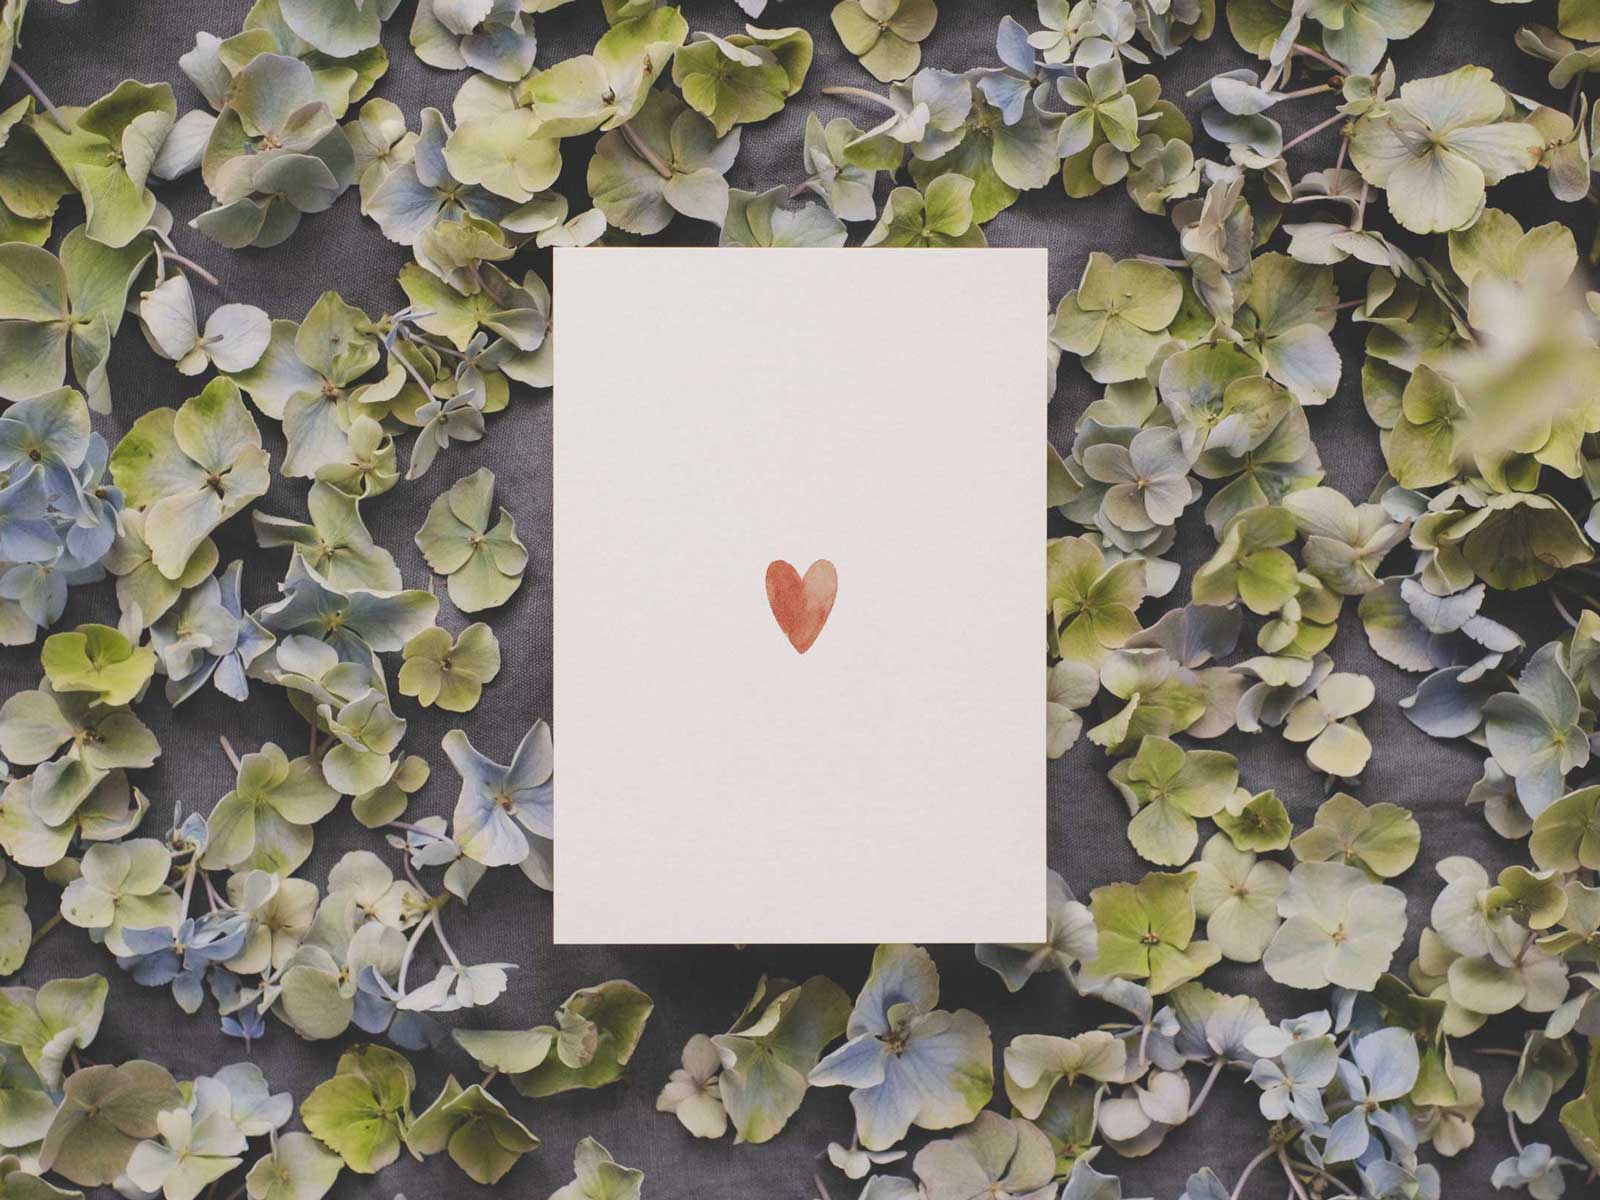 Herz | Postkarte